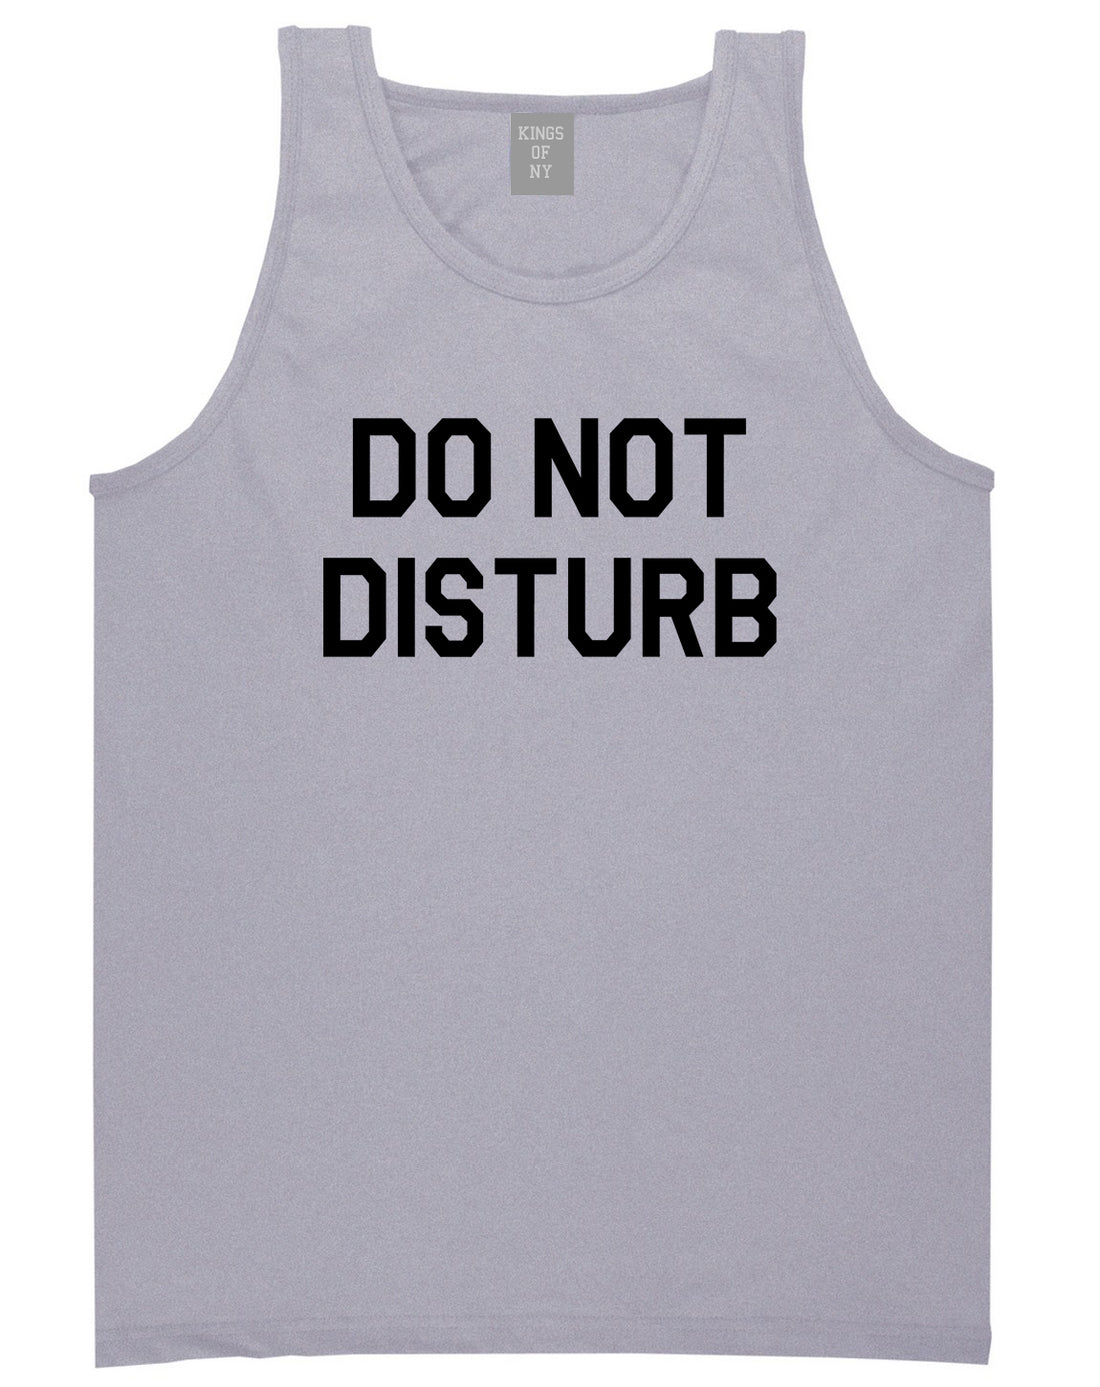 Do_Not_Disturb Mens Grey Tank Top Shirt by Kings Of NY